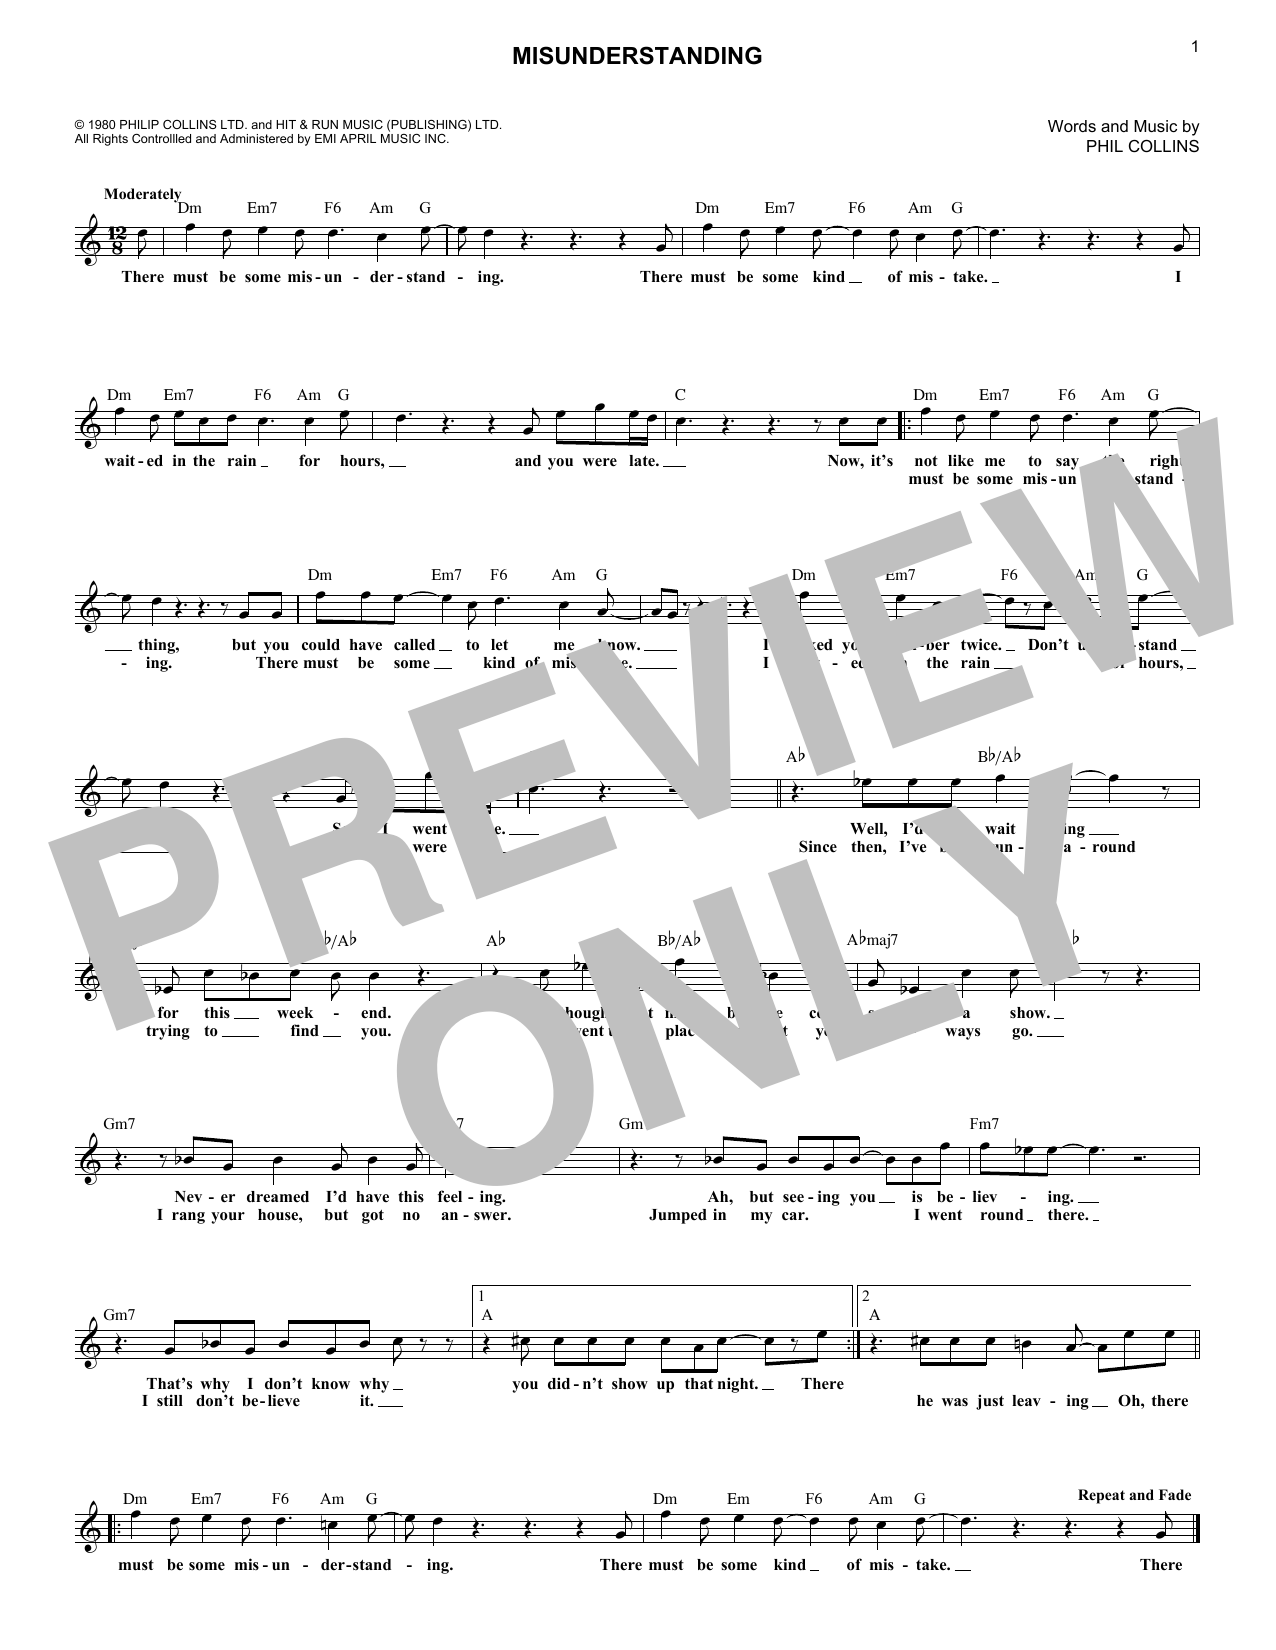 Genesis Misunderstanding Sheet Music Notes & Chords for Guitar Tab - Download or Print PDF